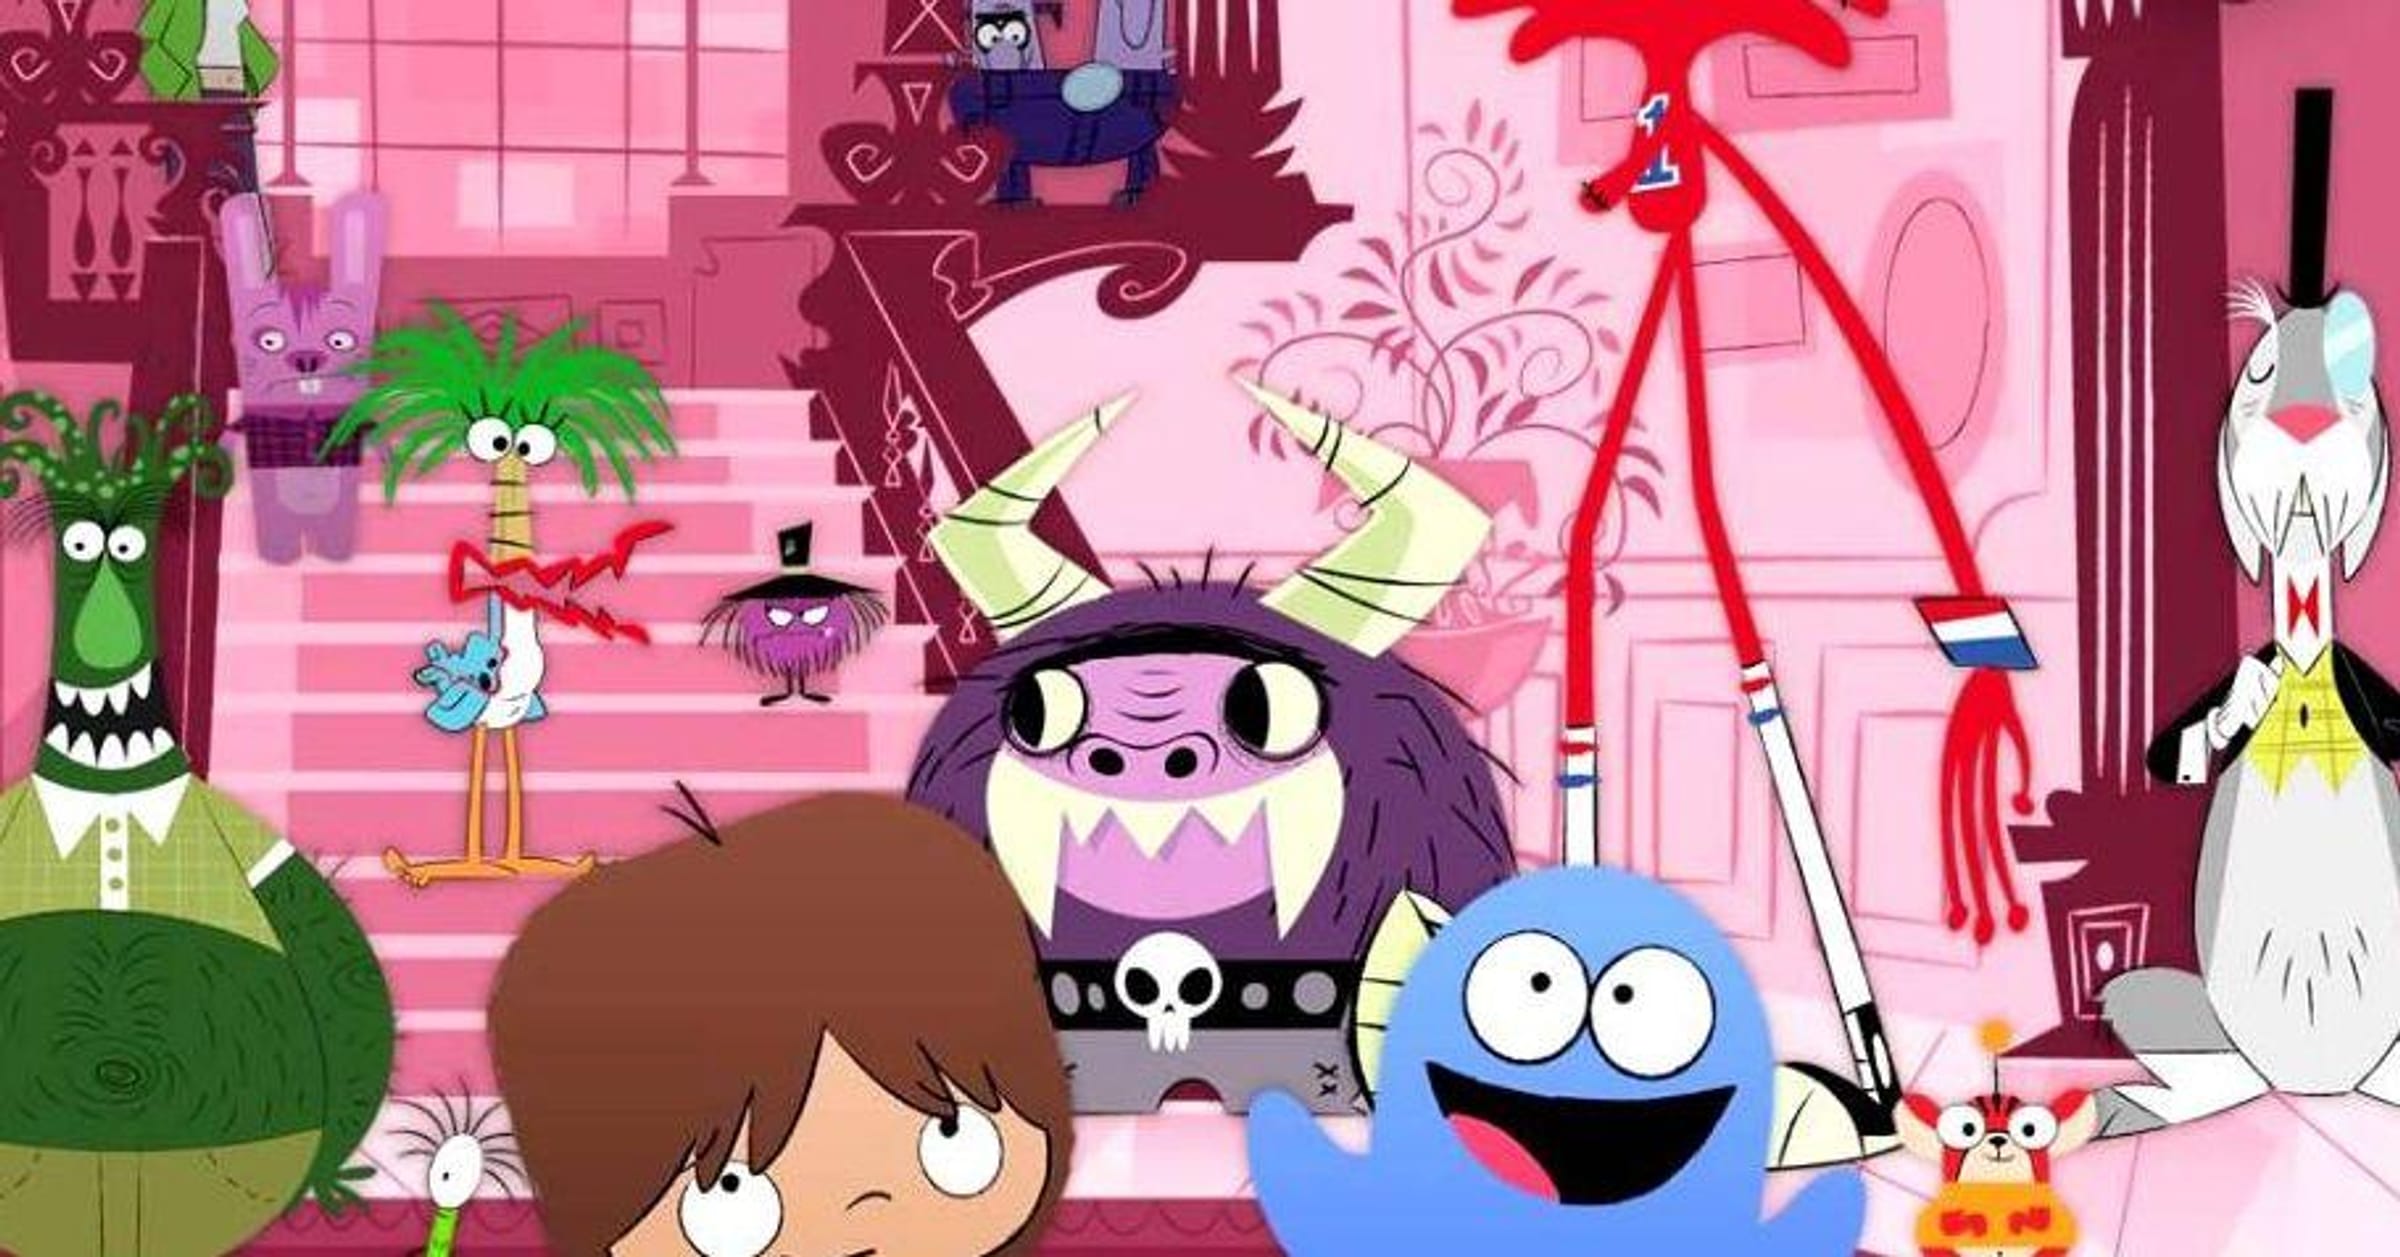 Cartoon Network turns 30 and millennials are nostalgic, feeling